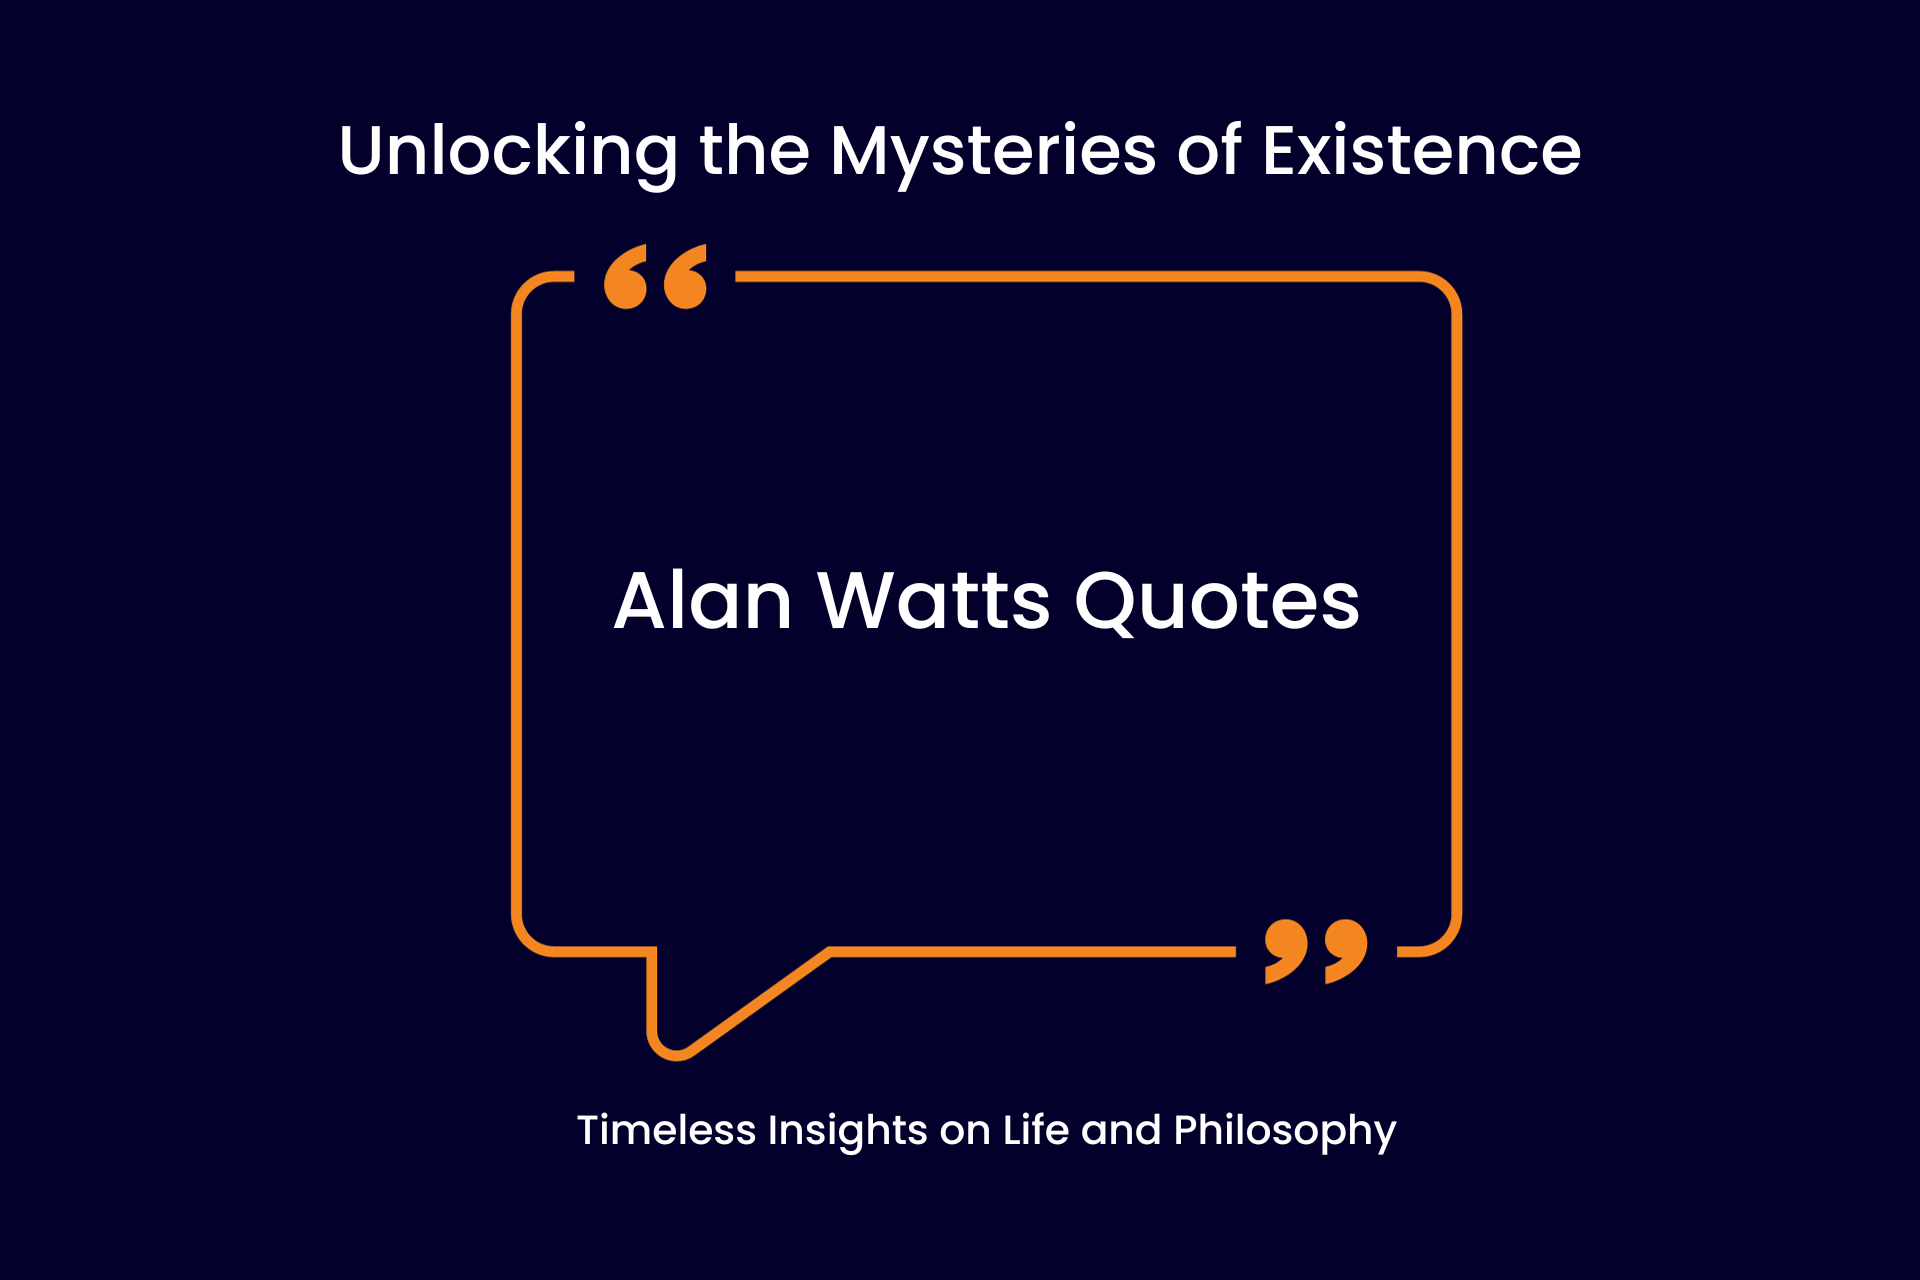 Alan Watts quotes